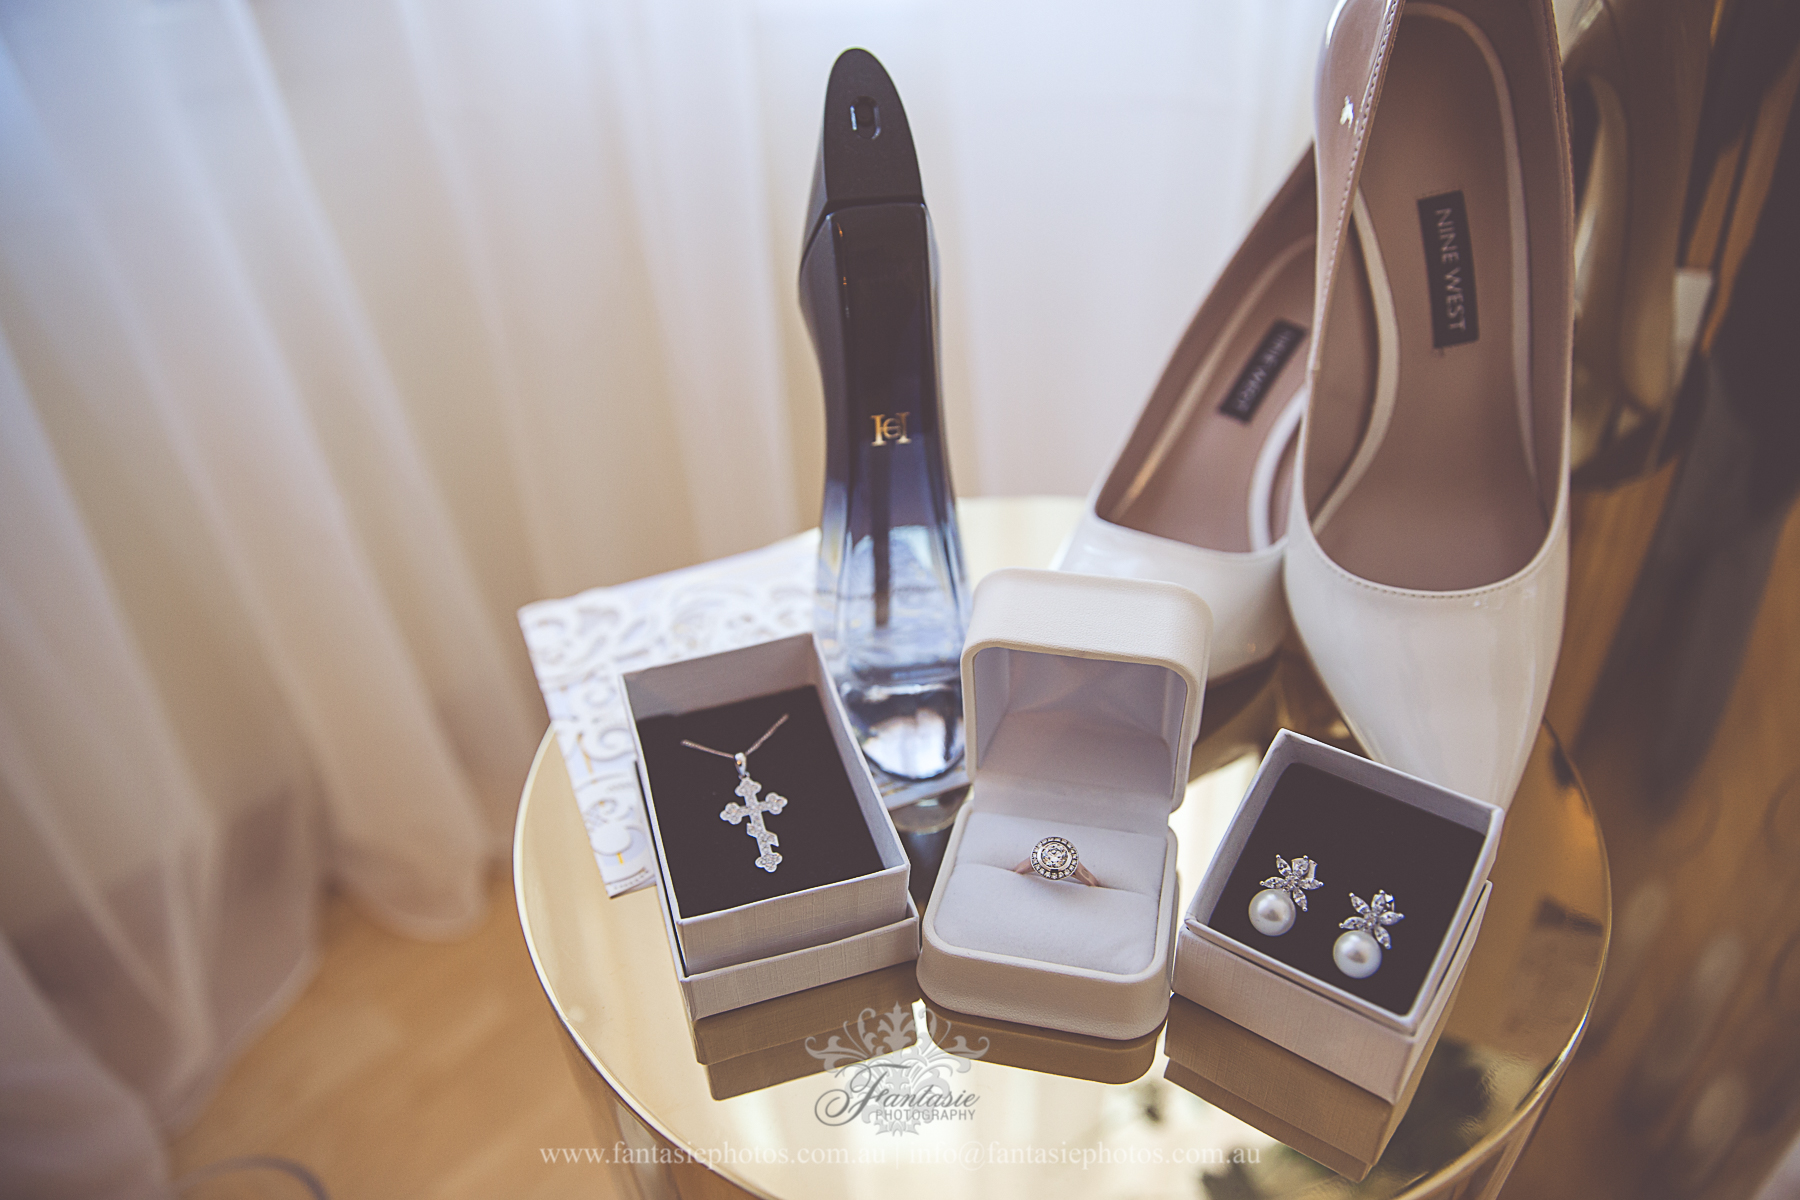 Wedding Photography Lantana Venue | Fantasie Photography